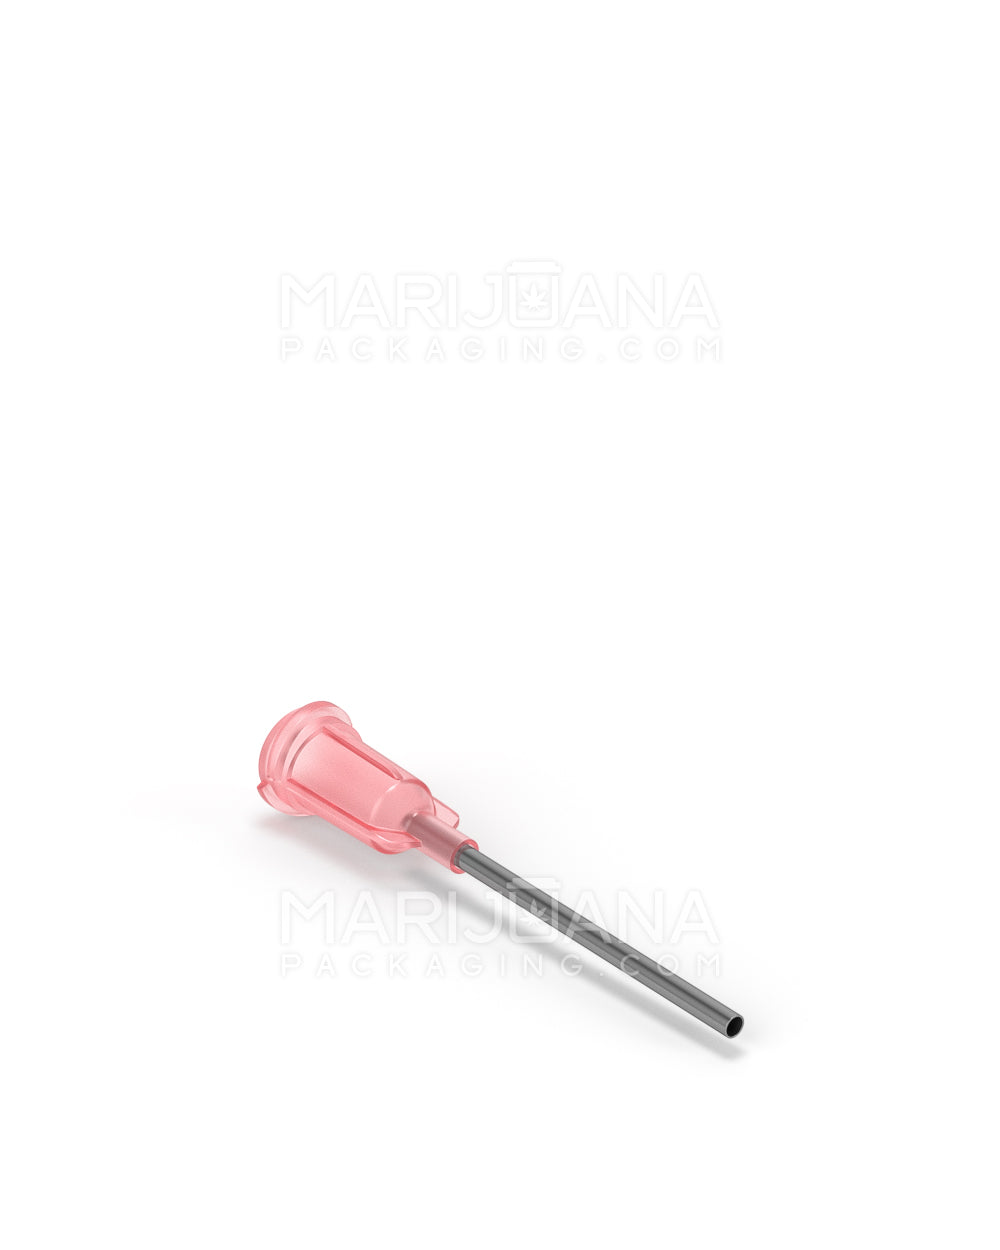 Pink Replacement Needles | 1in - 18 Gauge - 15 Count - 3